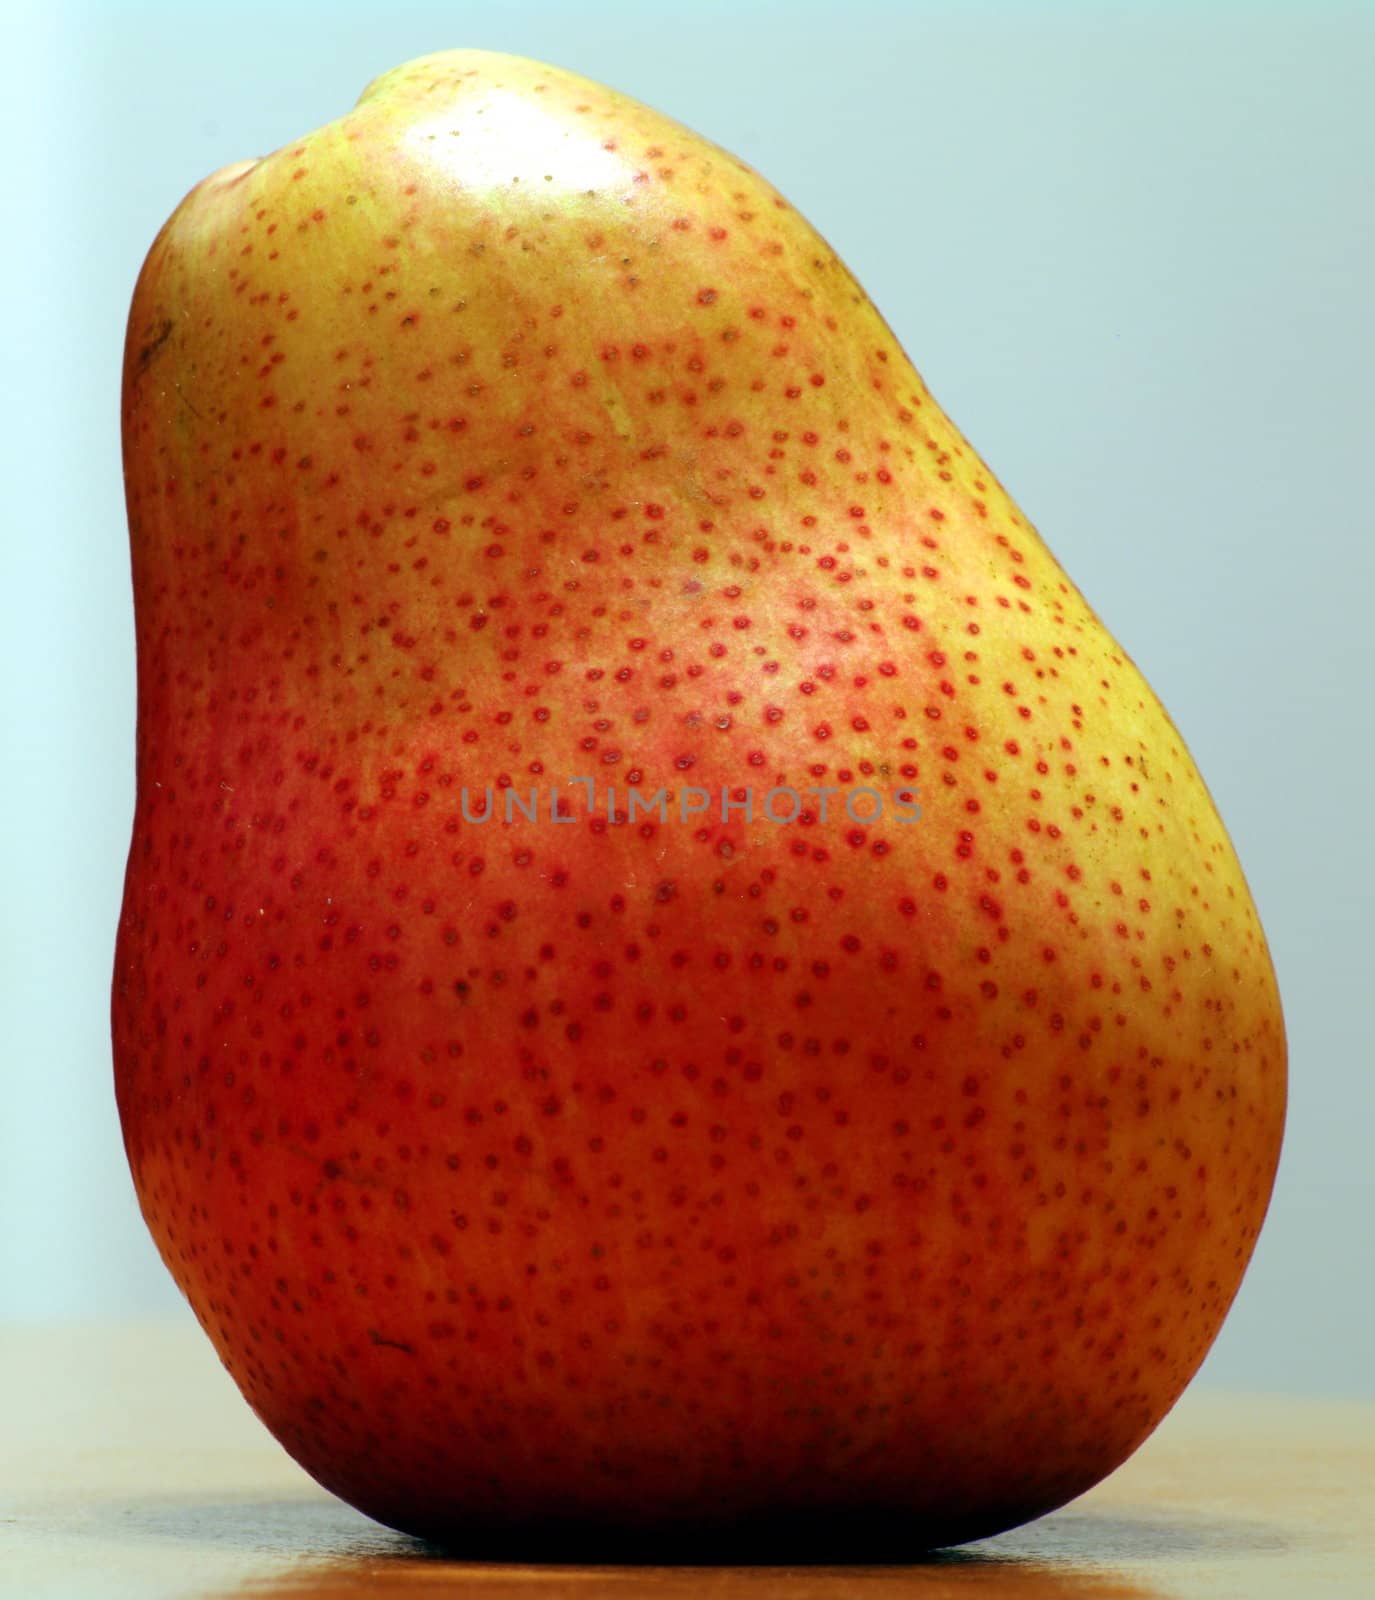 Fresh pear in light background by Stoyanov